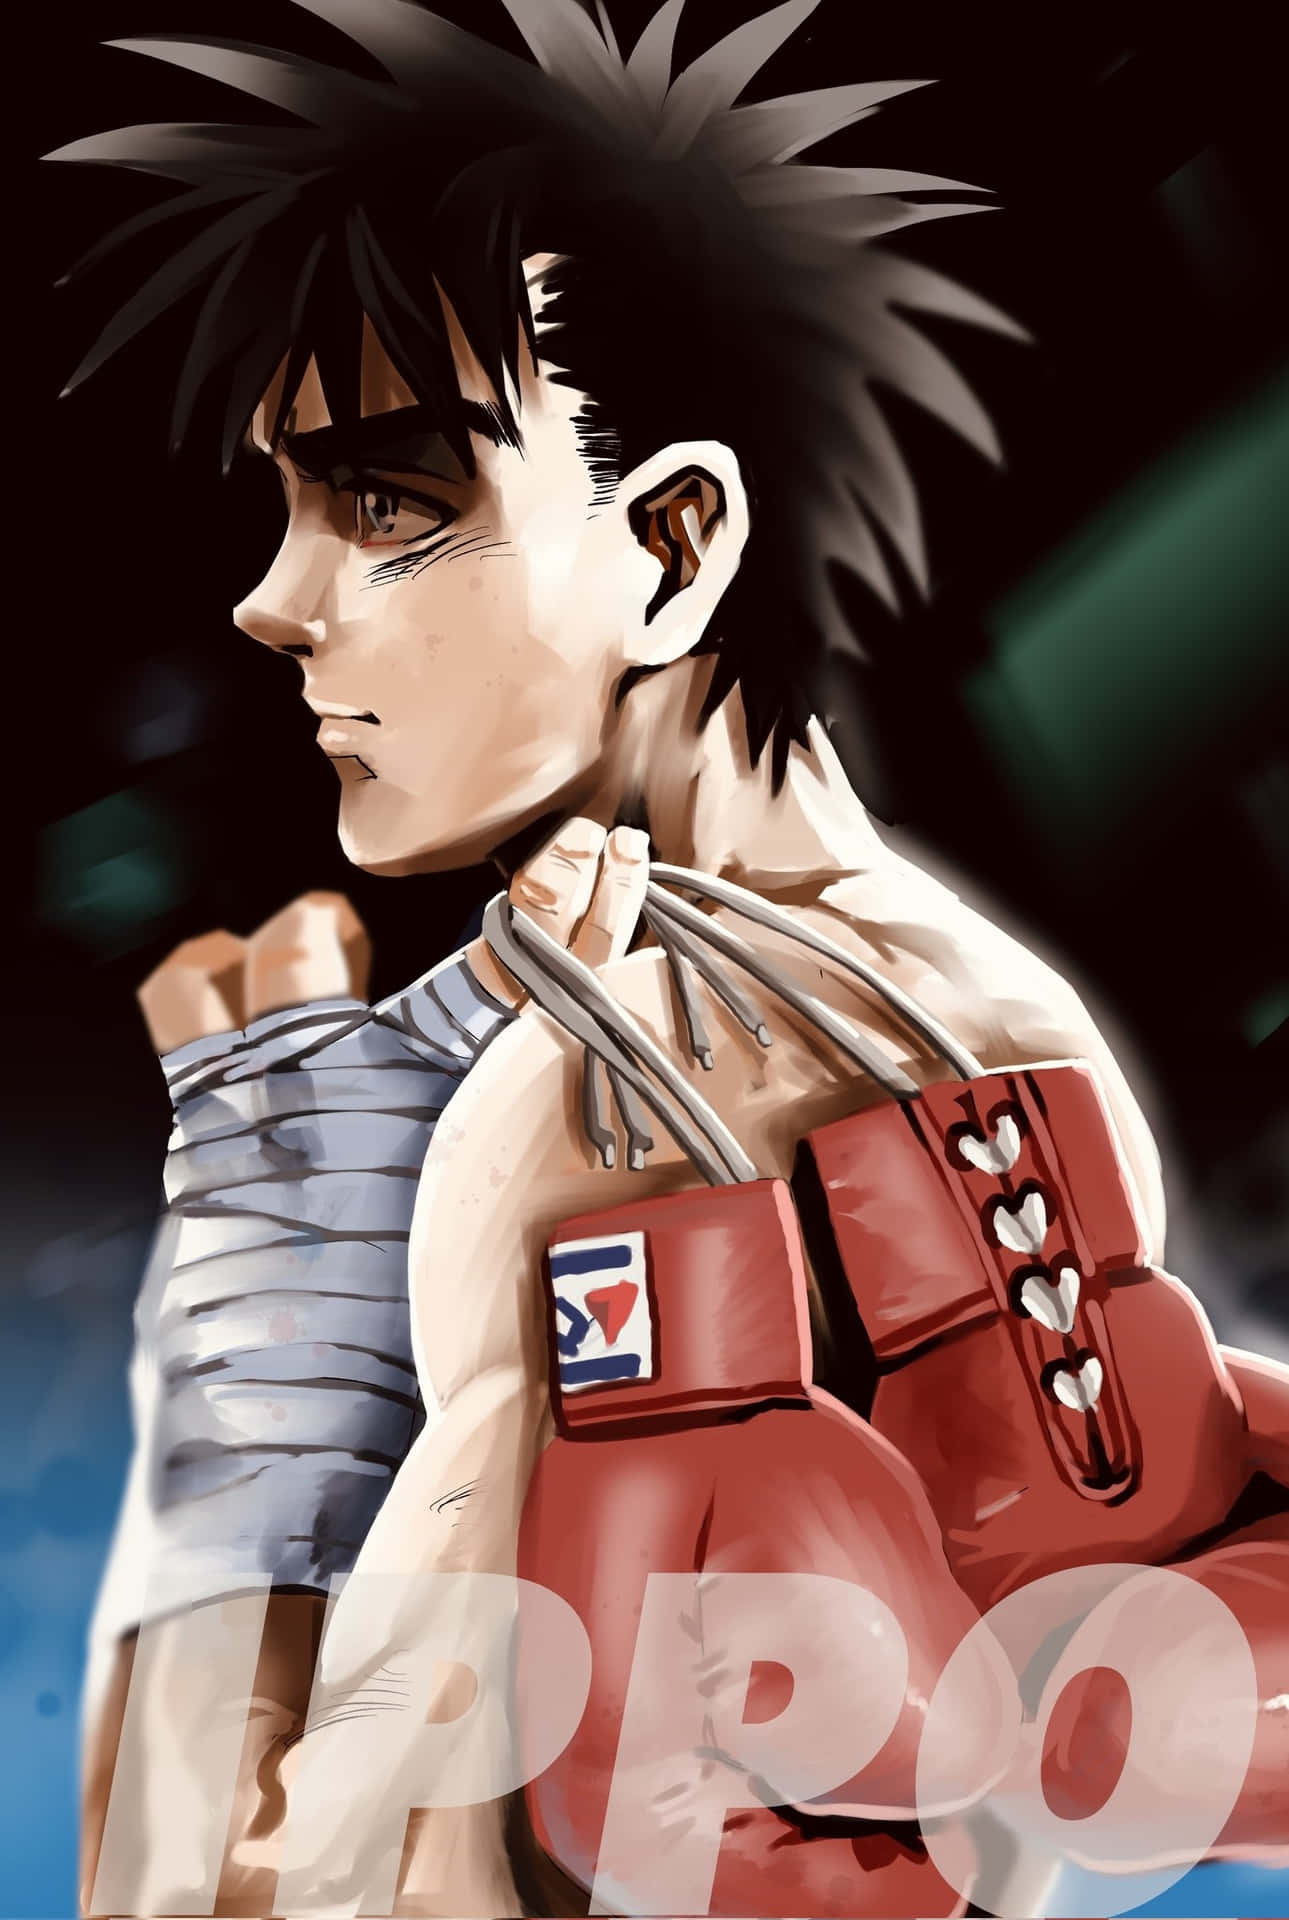 Ippo Makunouchi Boxing Anime Artwork Wallpaper